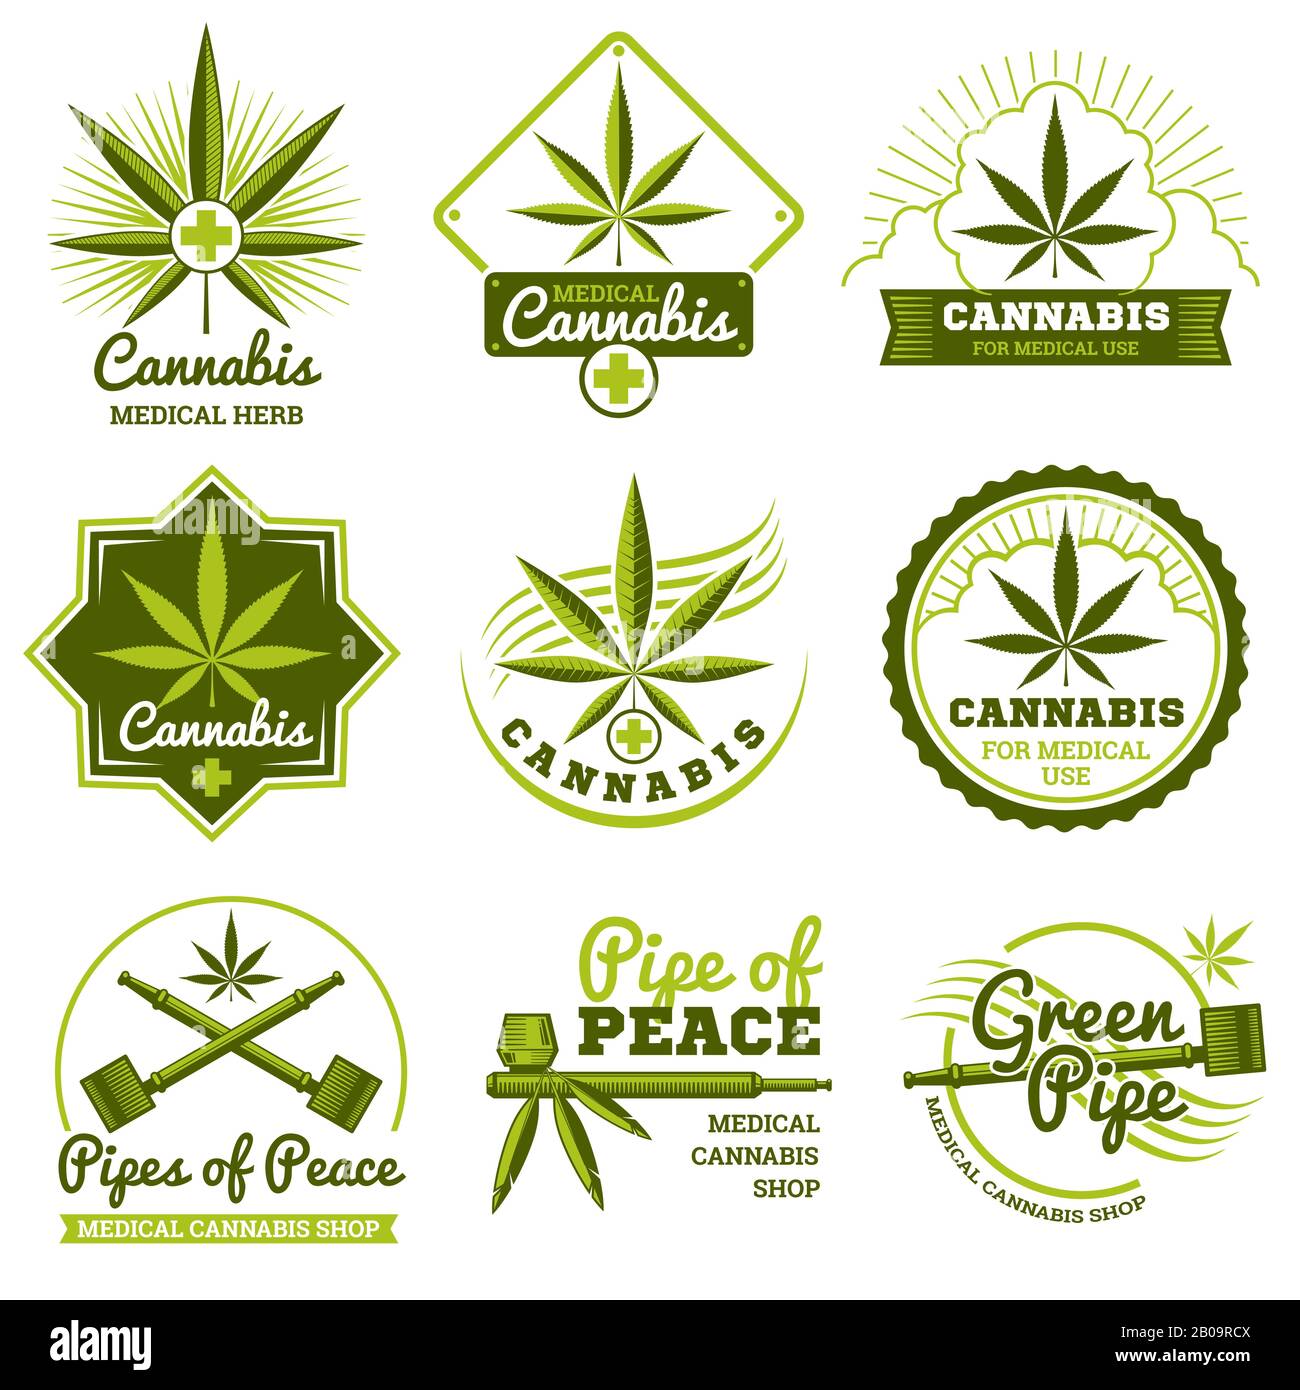 Hashish, rastaman, hemp, cannabis vector logos and labels set. Medicine marijuana and label shop marijuana organic illustration Stock Vector